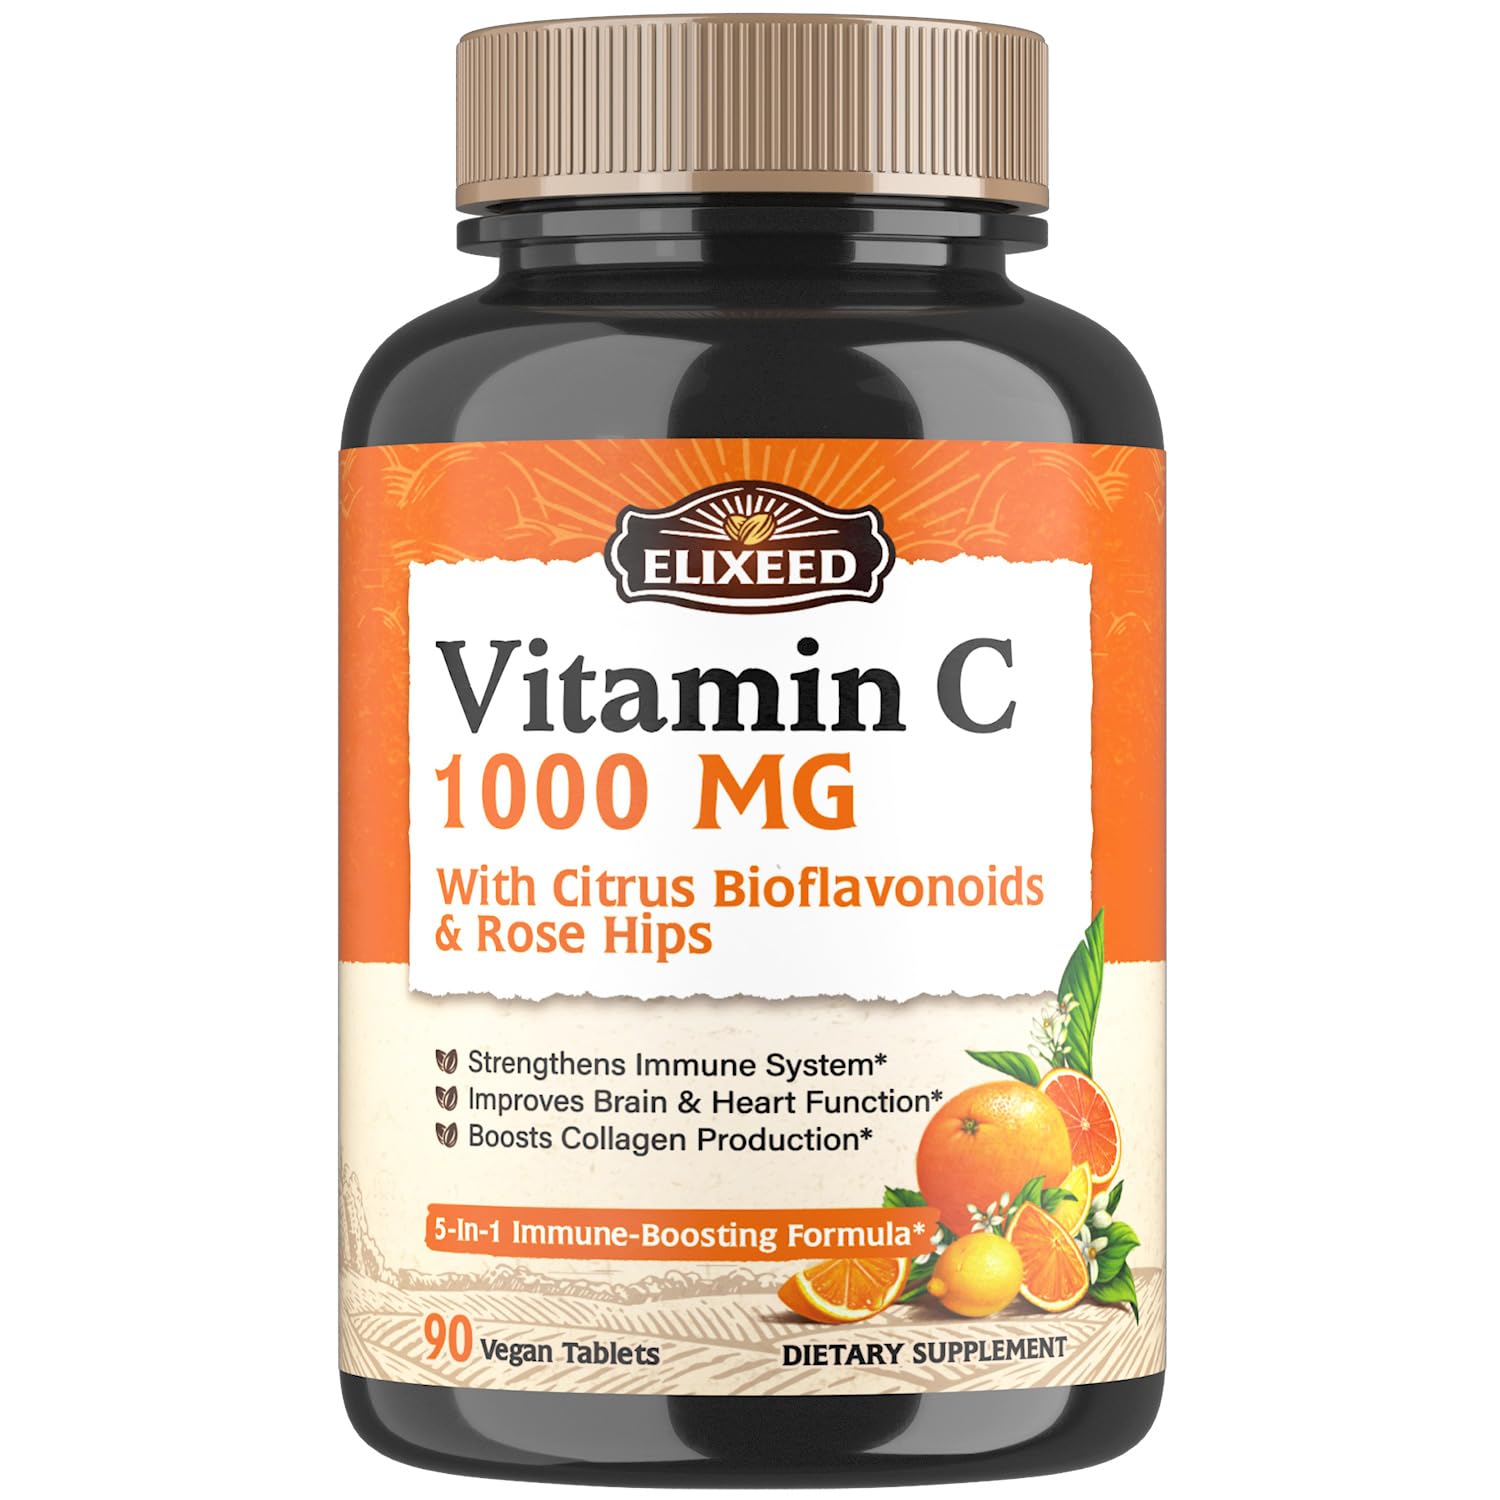 Citrus bioflavonoids and antioxidants